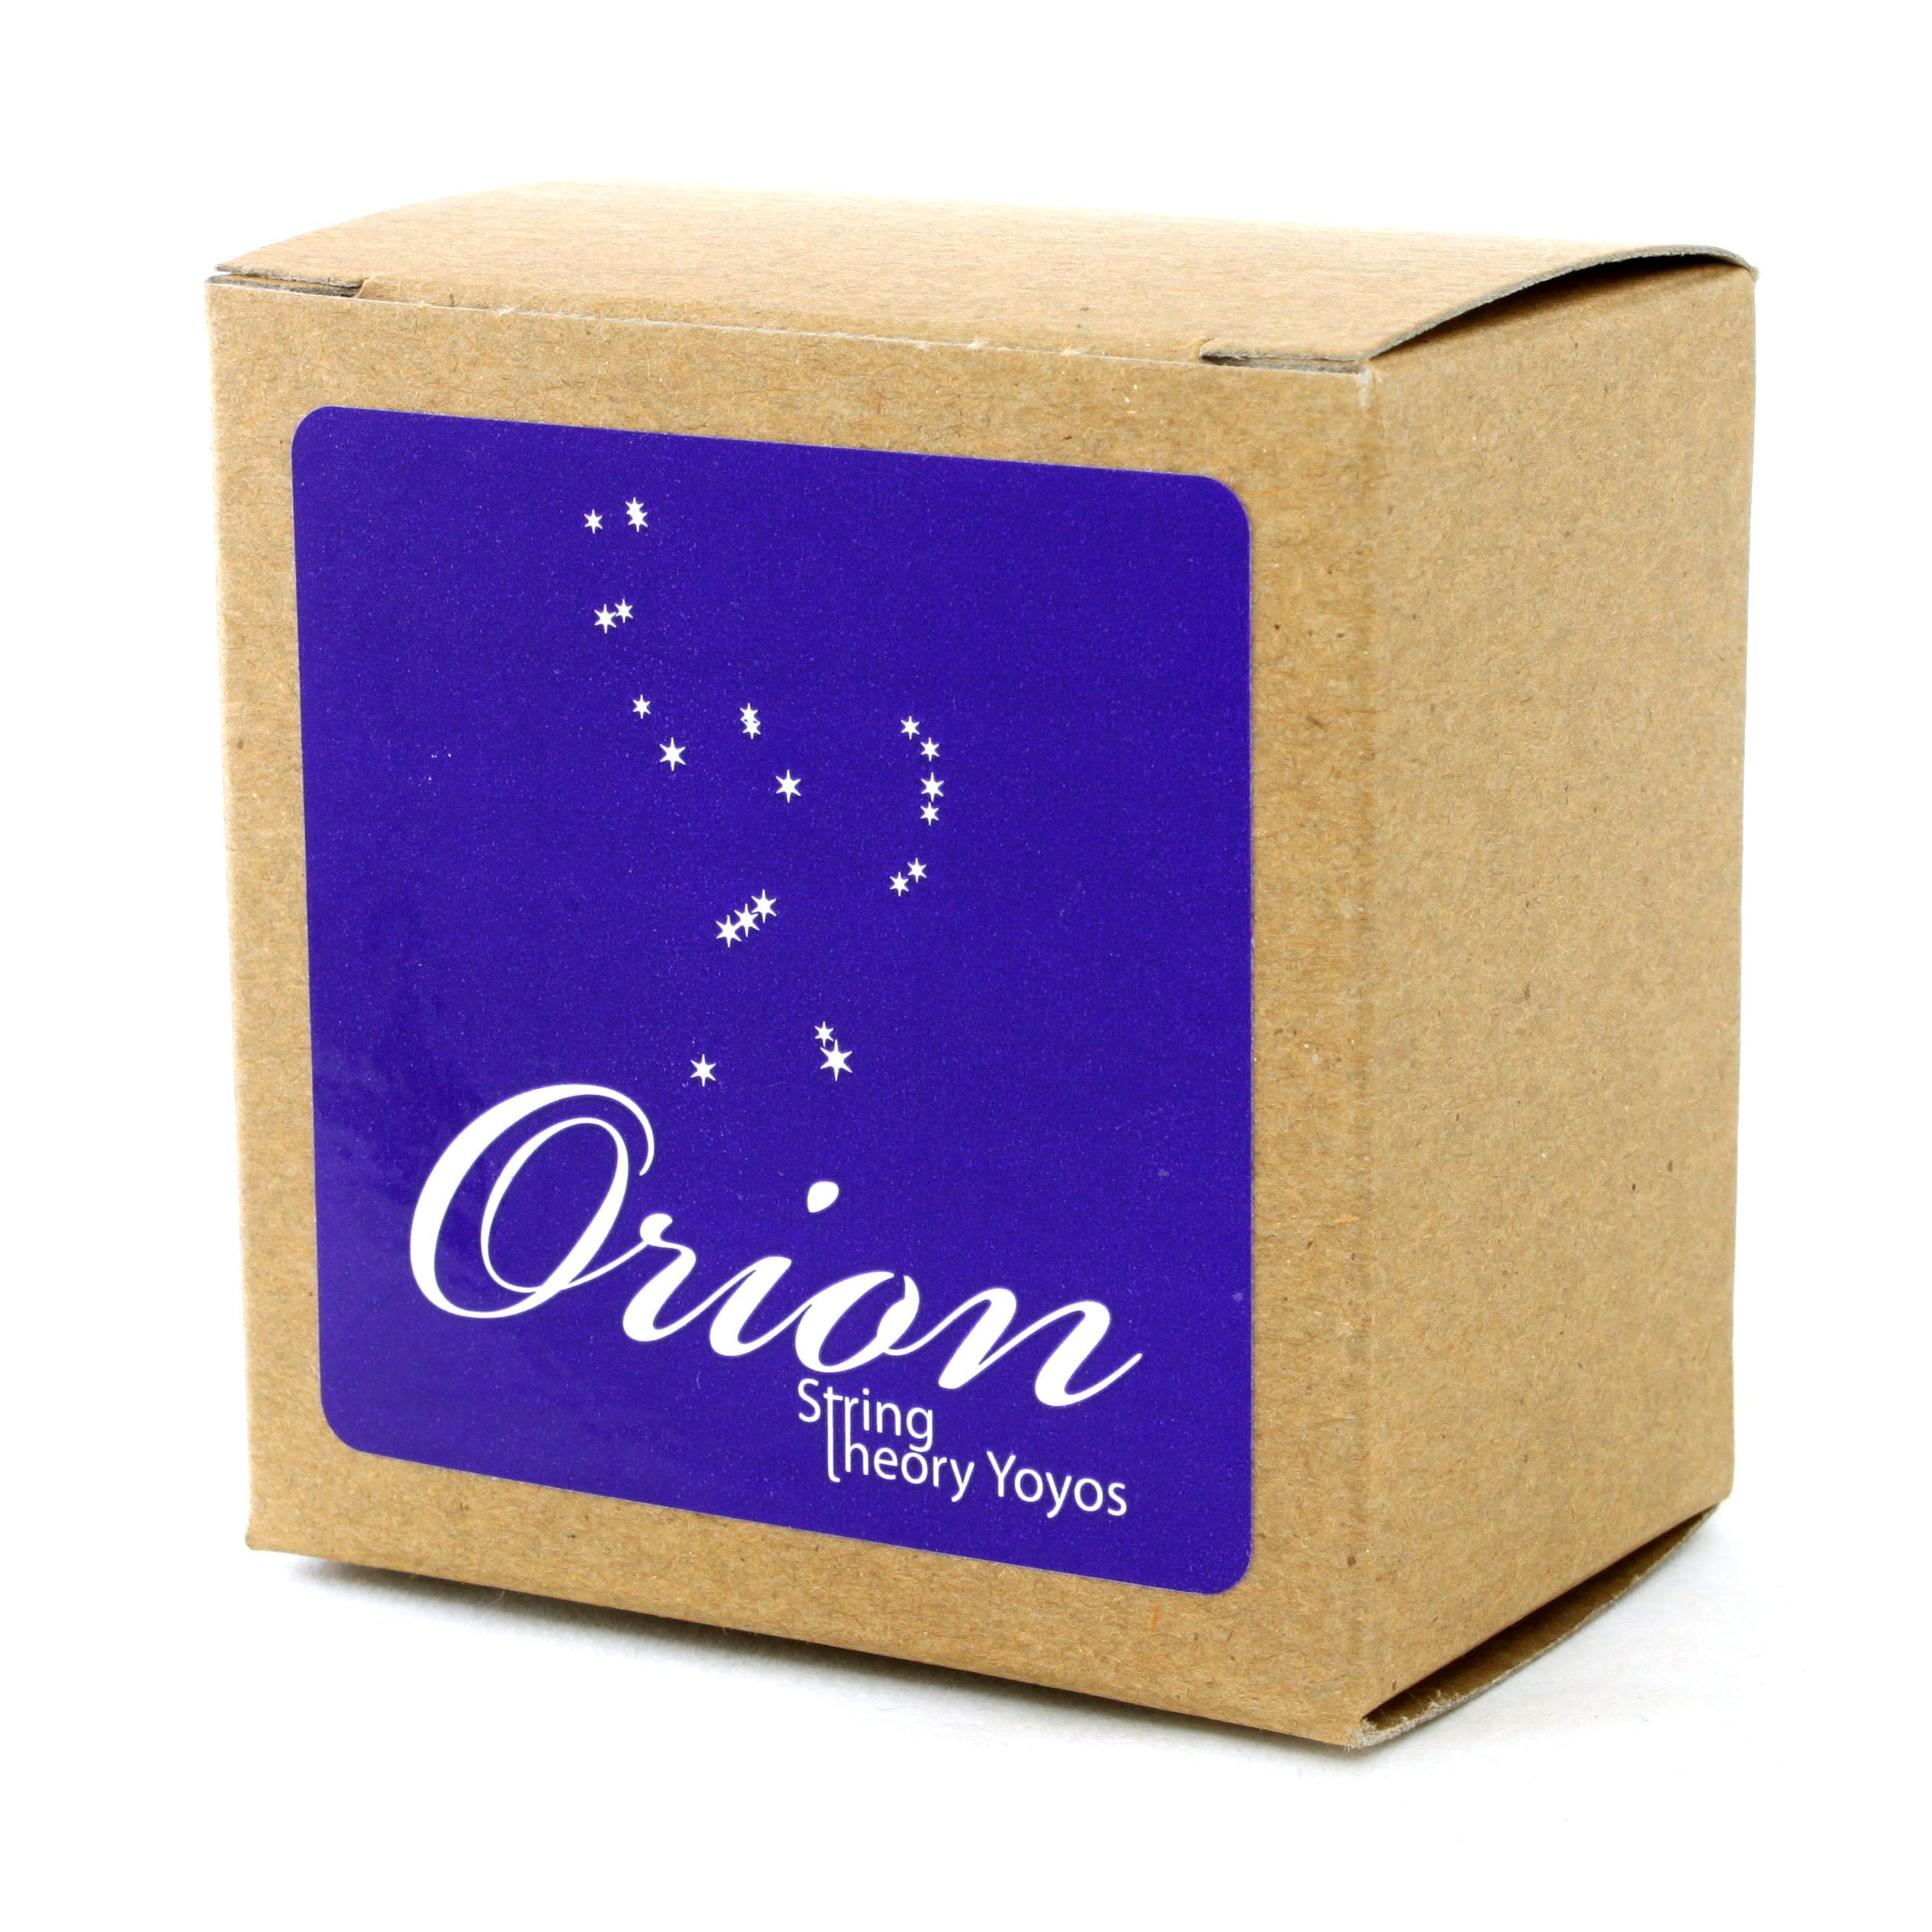 Orion - String Theory Yoyos